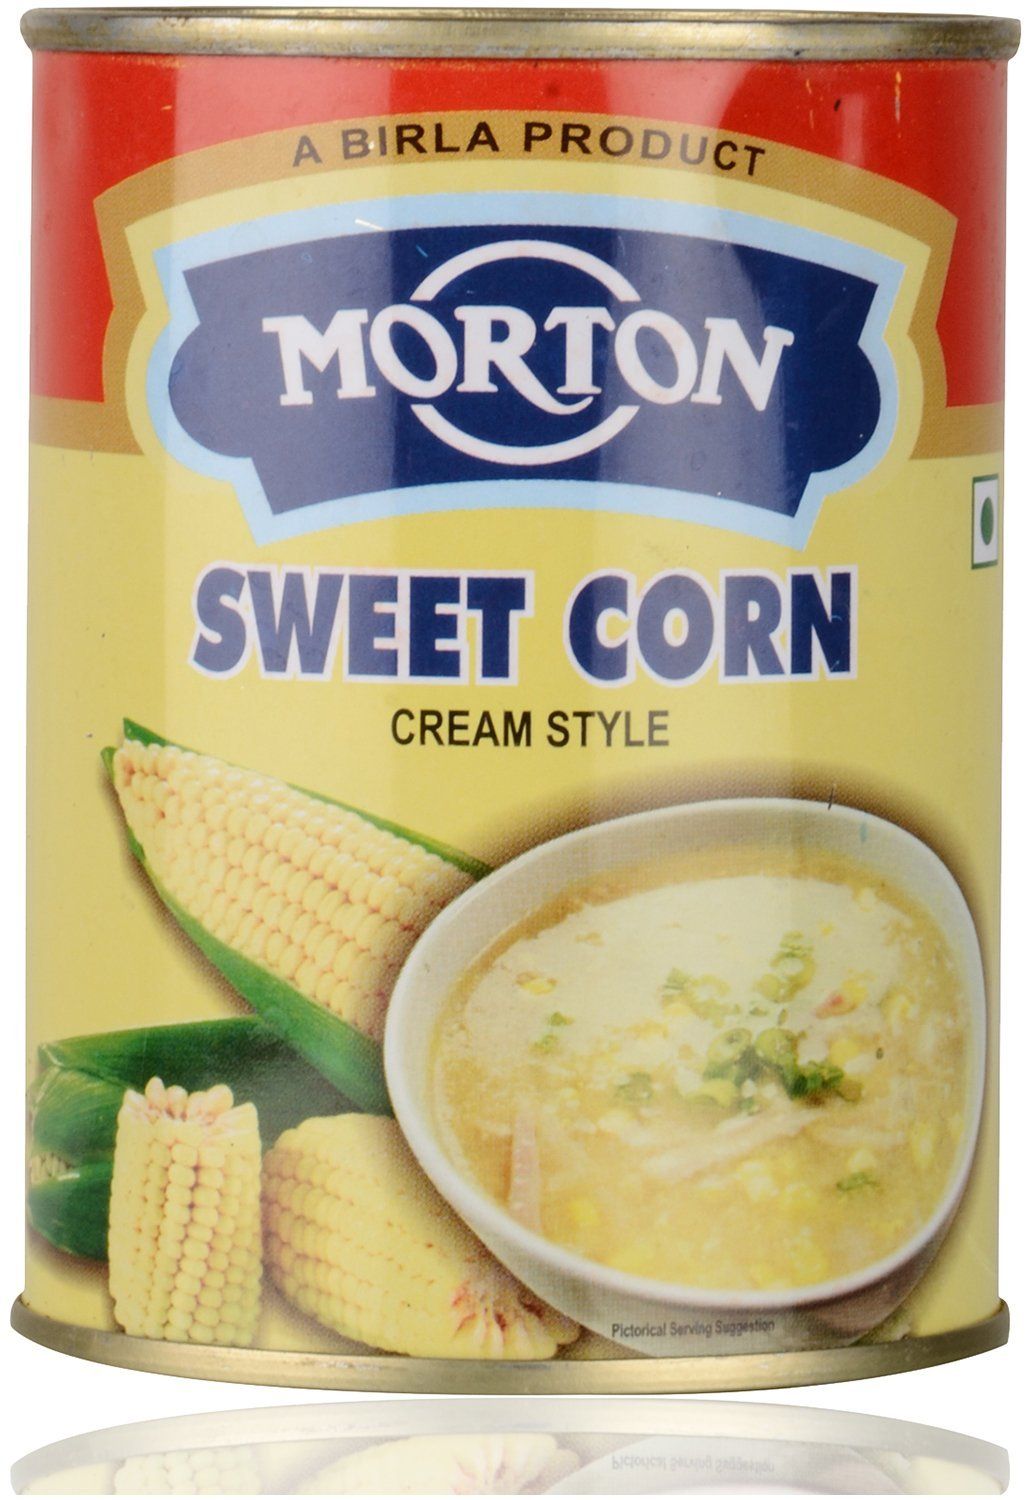 Morton Sweet Corn Image